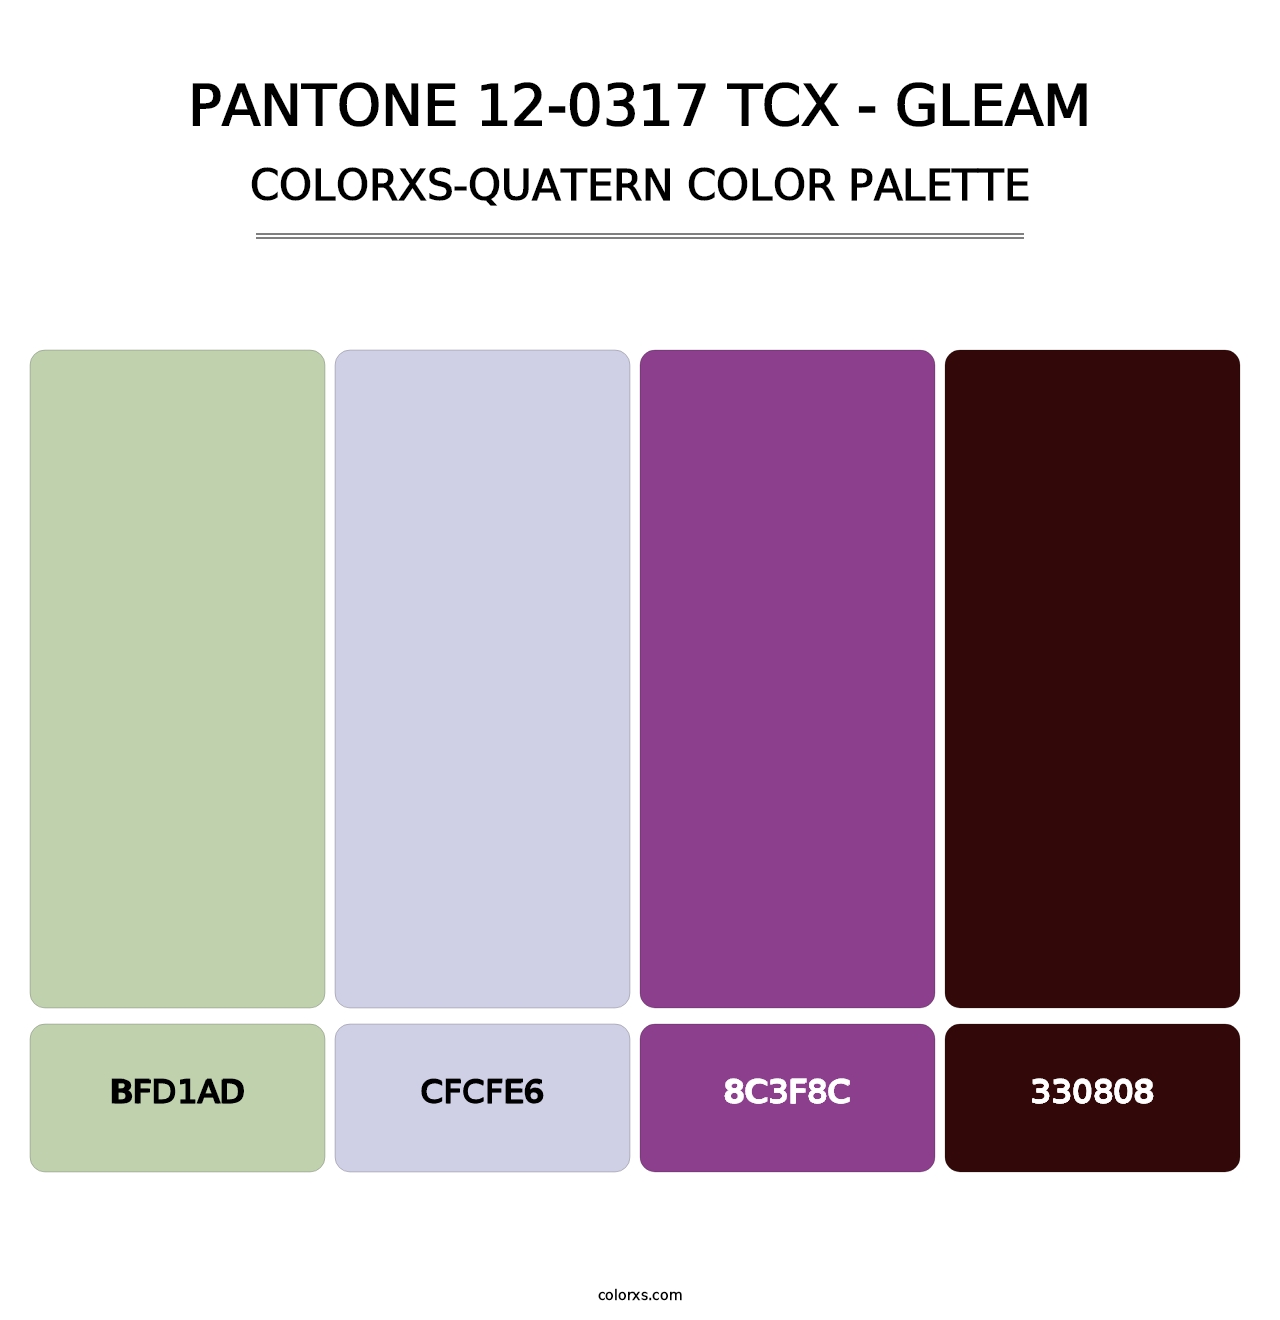 PANTONE 12-0317 TCX - Gleam - Colorxs Quatern Palette